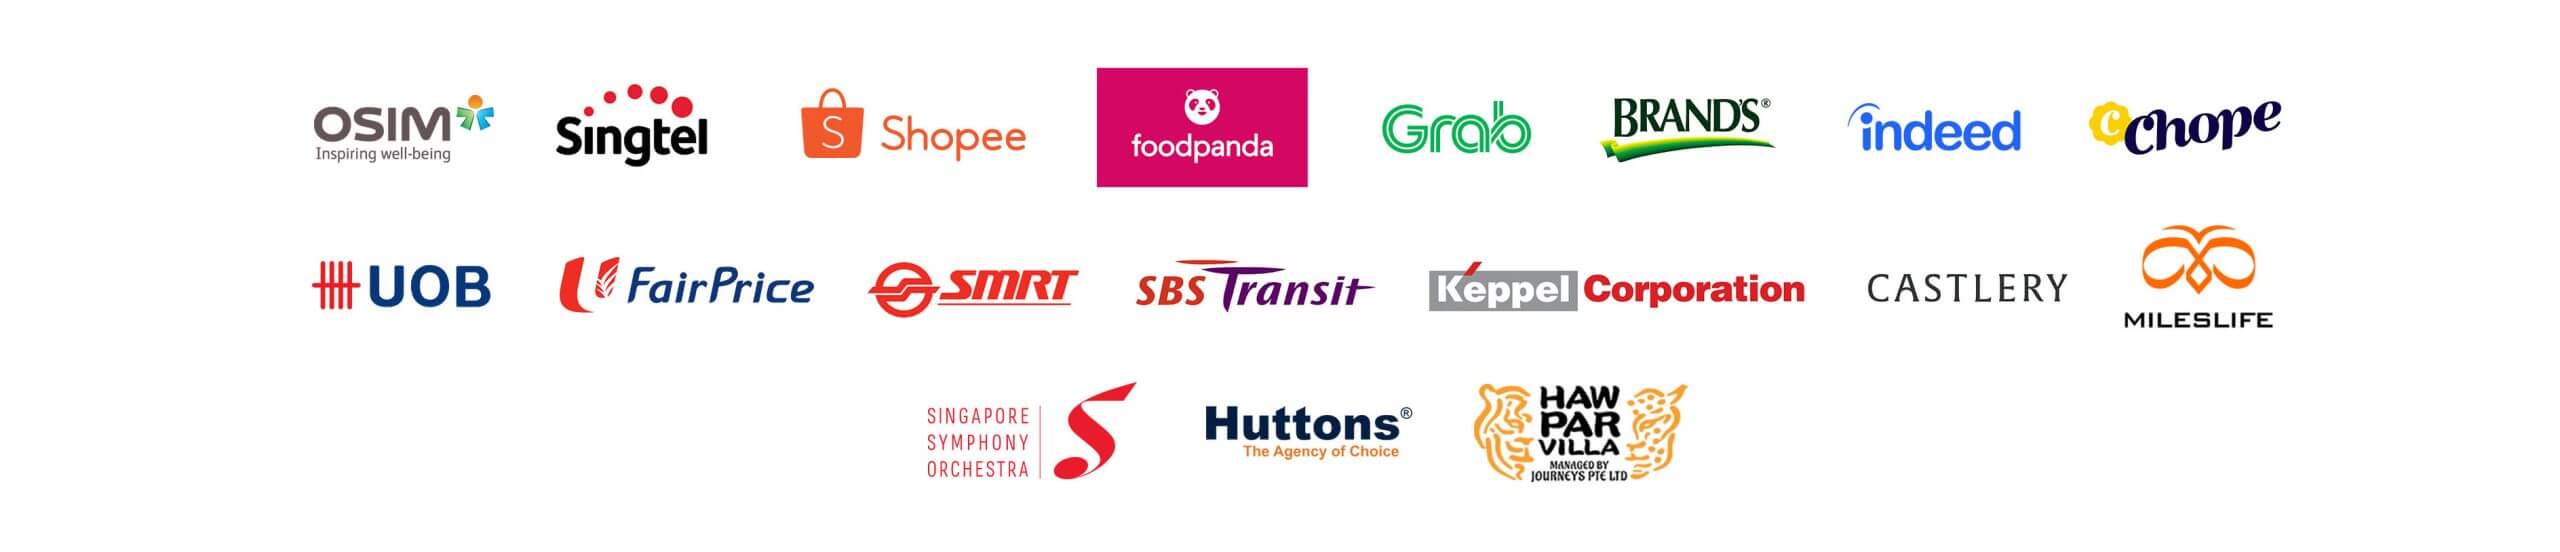 TREA Clients Corporate Printing_Local Singapore Companies